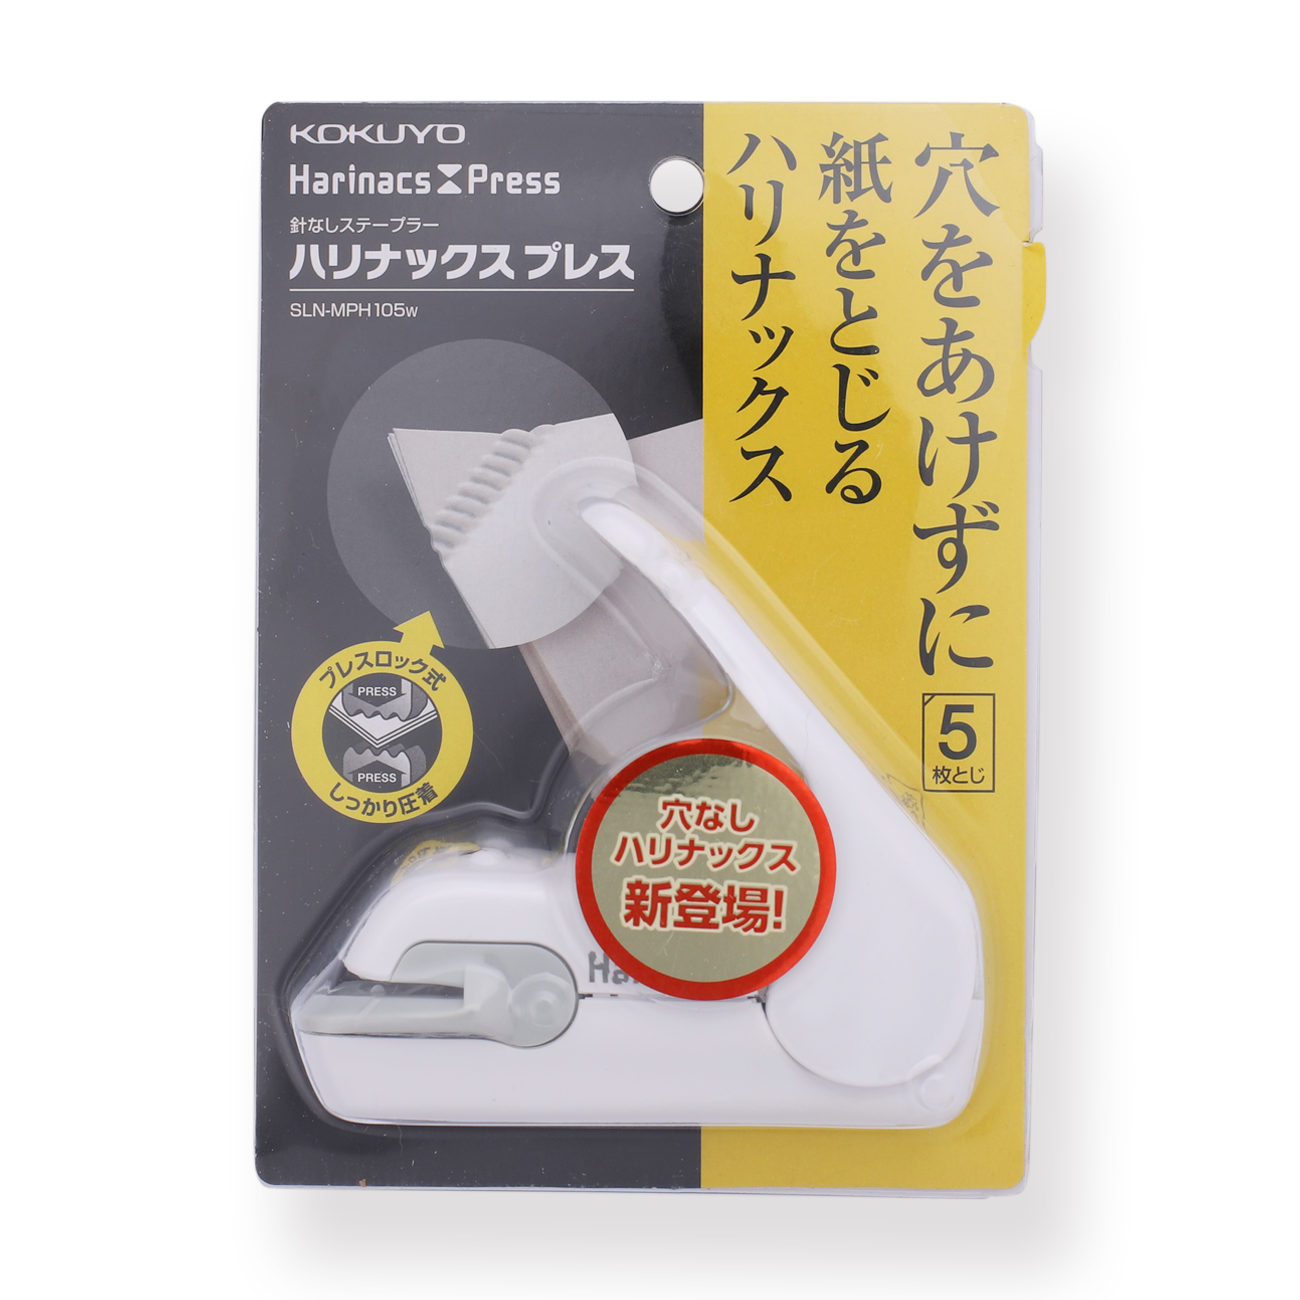 Kokuyo Japan Harinacs Stapleless Stapler Compact SLN-MPH105W White